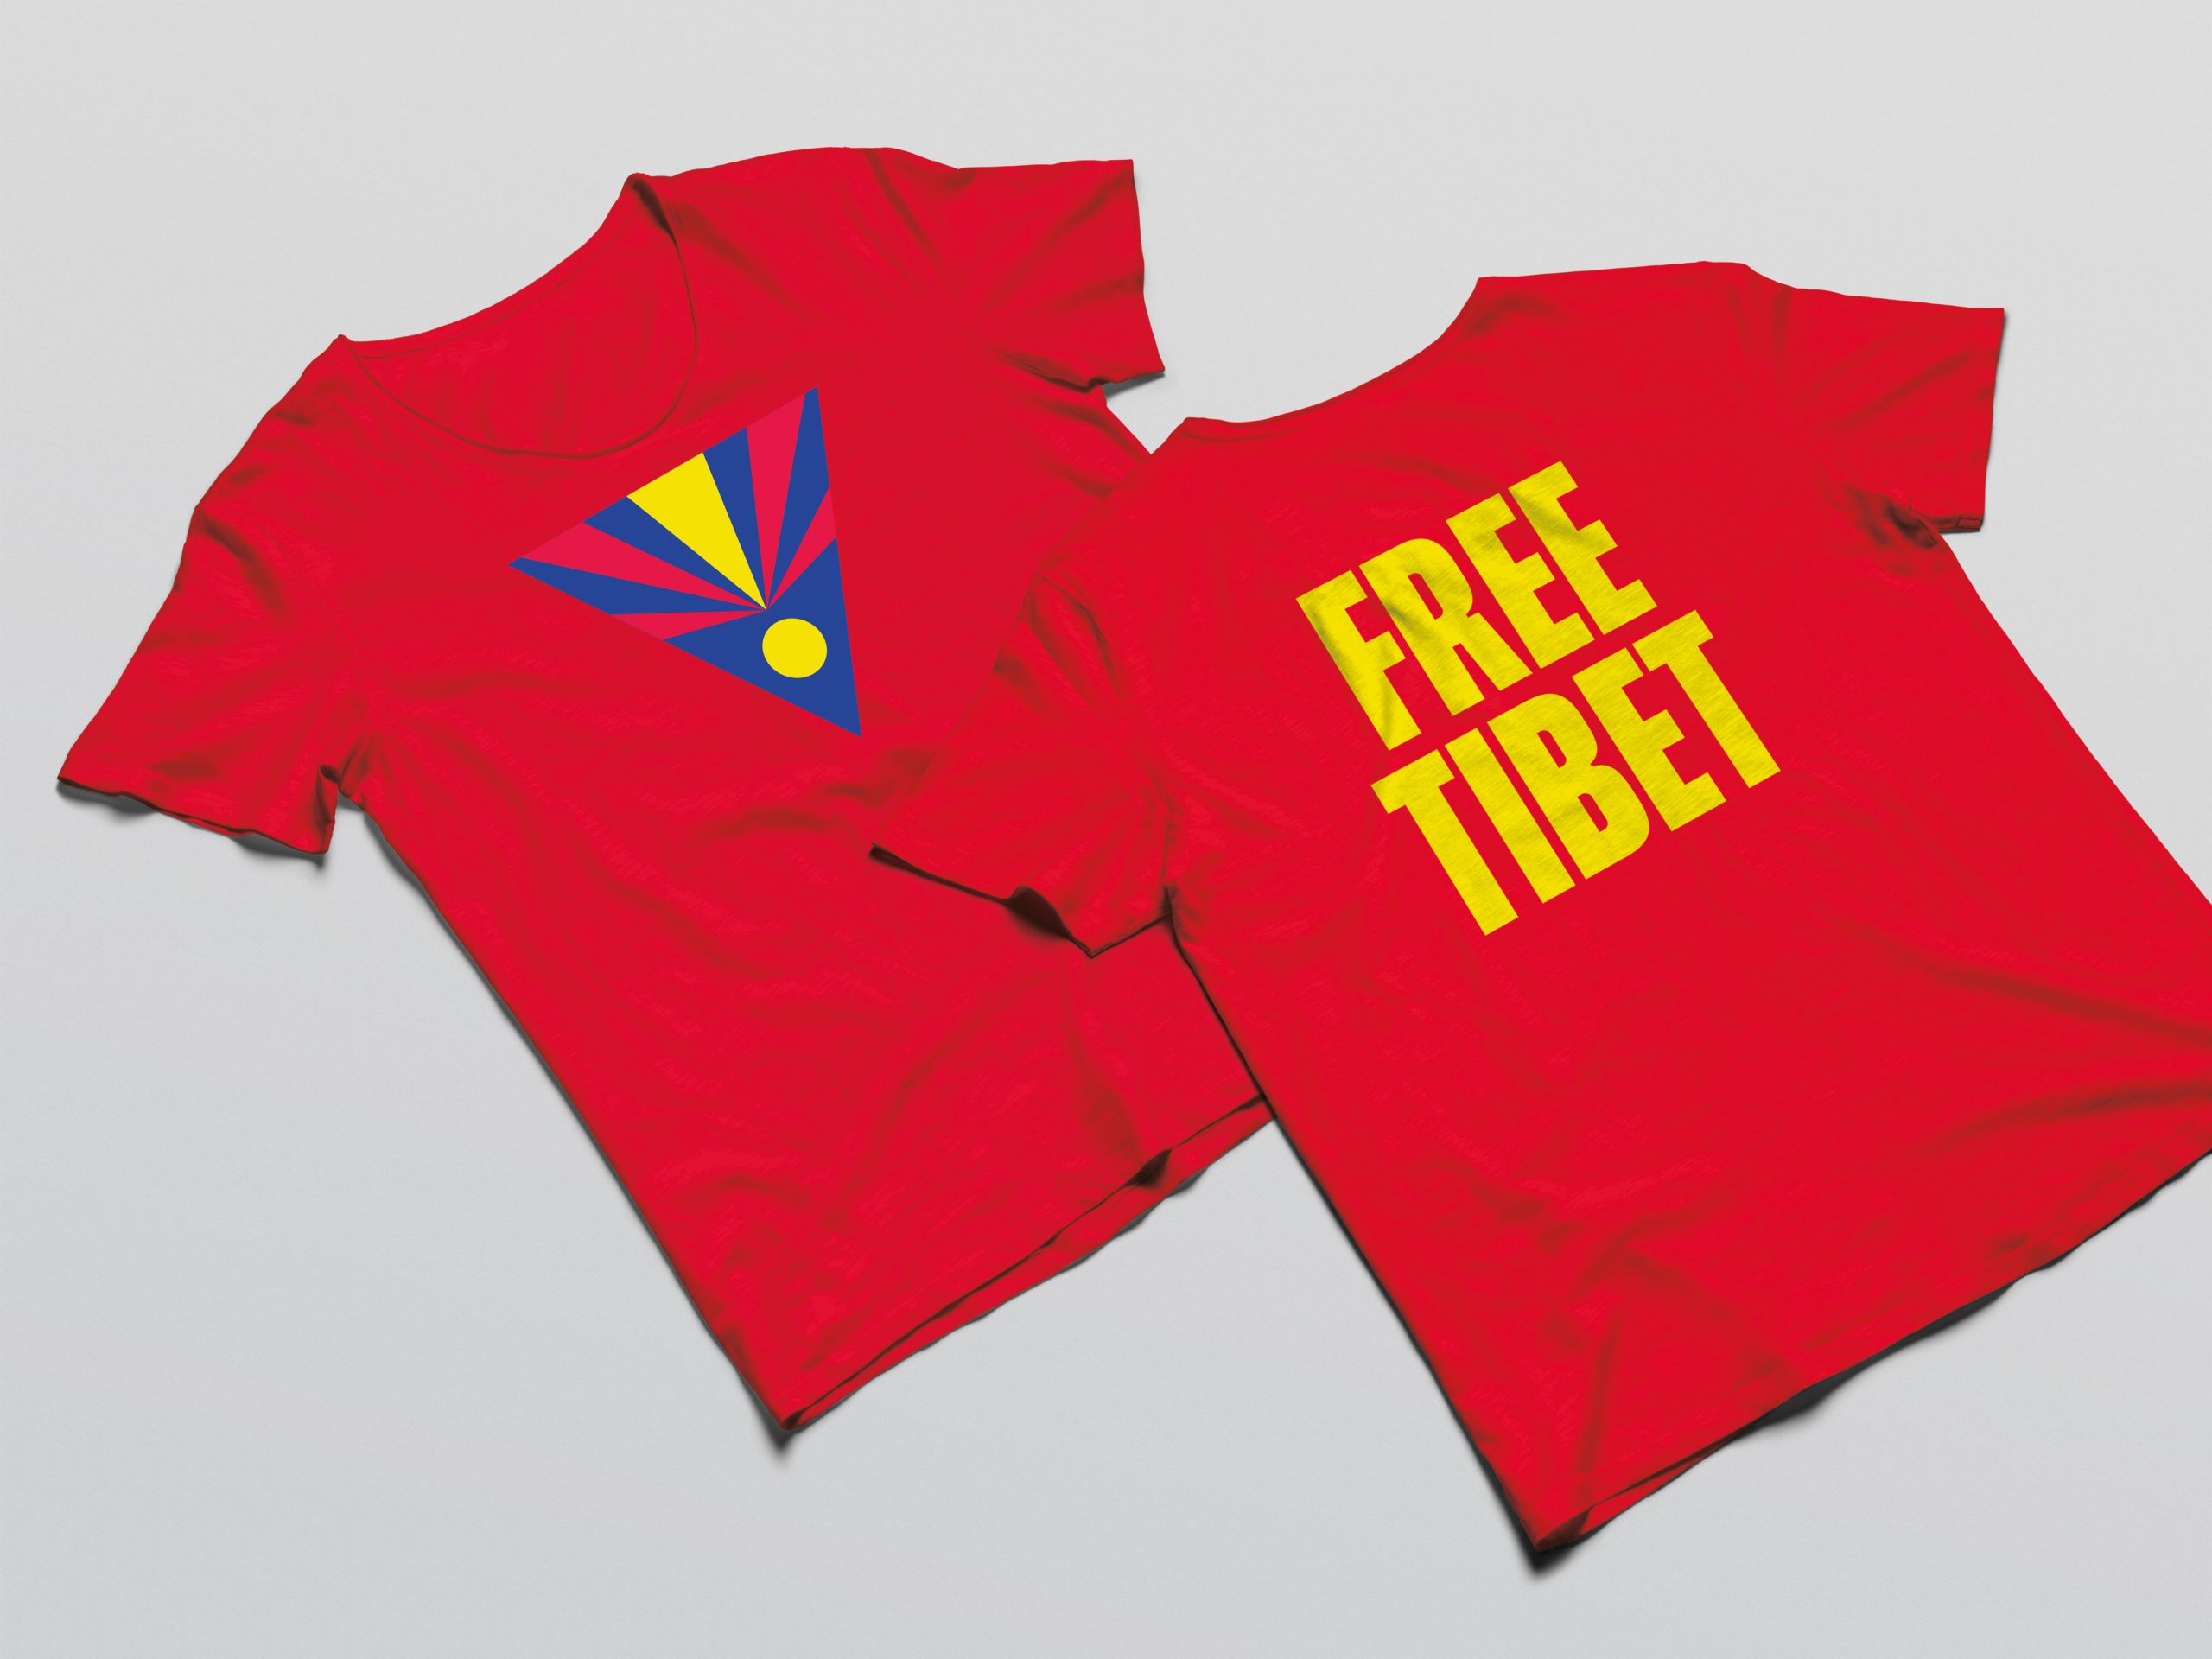 Free Tibet tee shirt